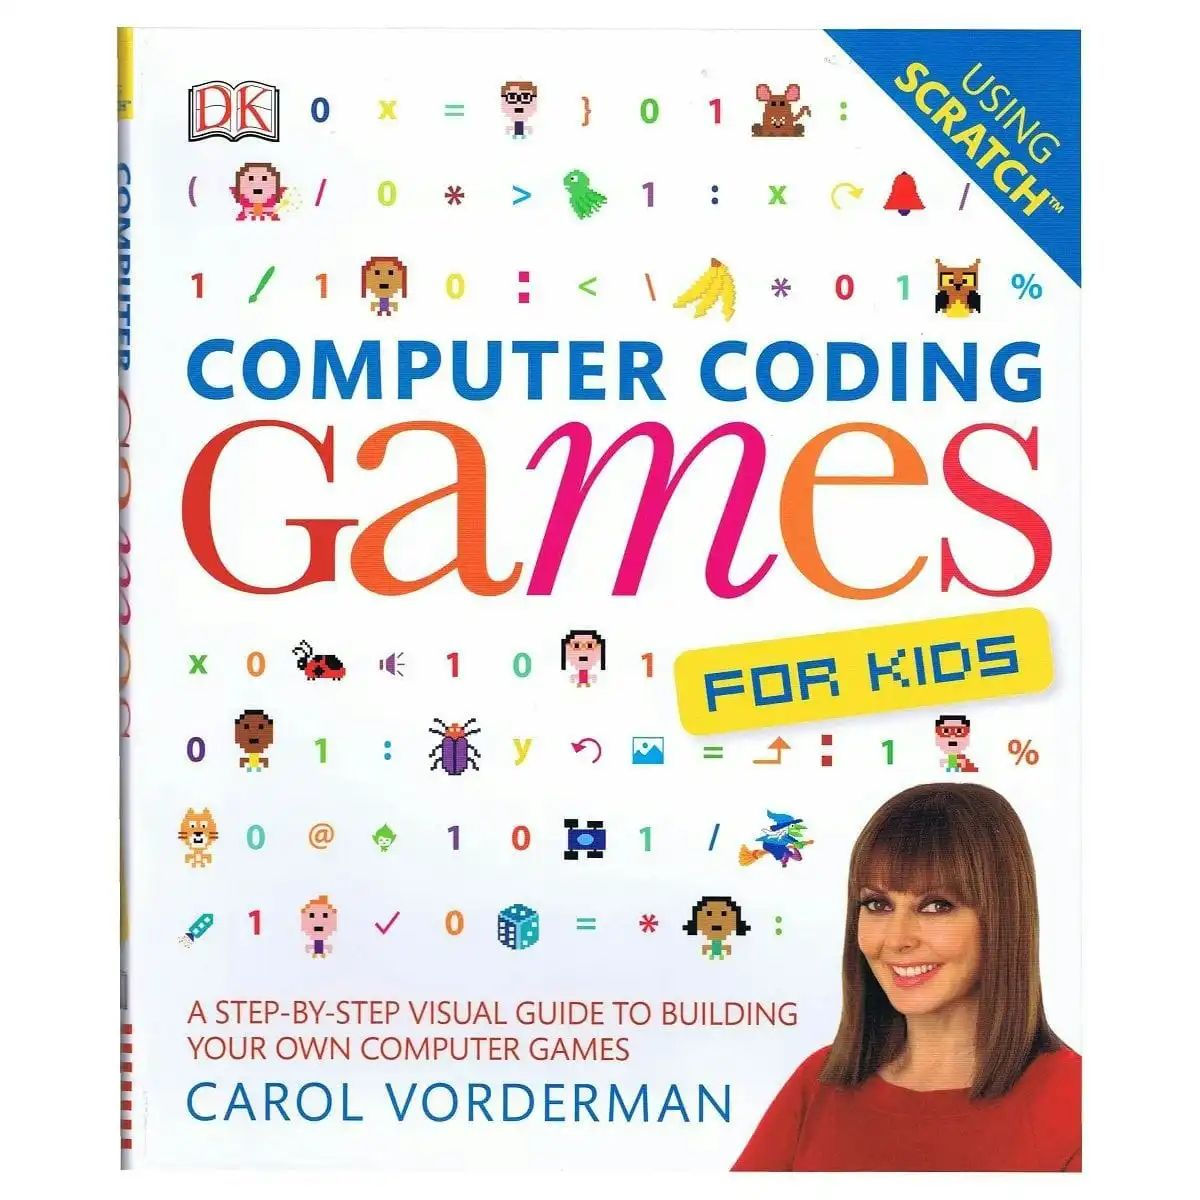 DK Computer Coding Games For Kids